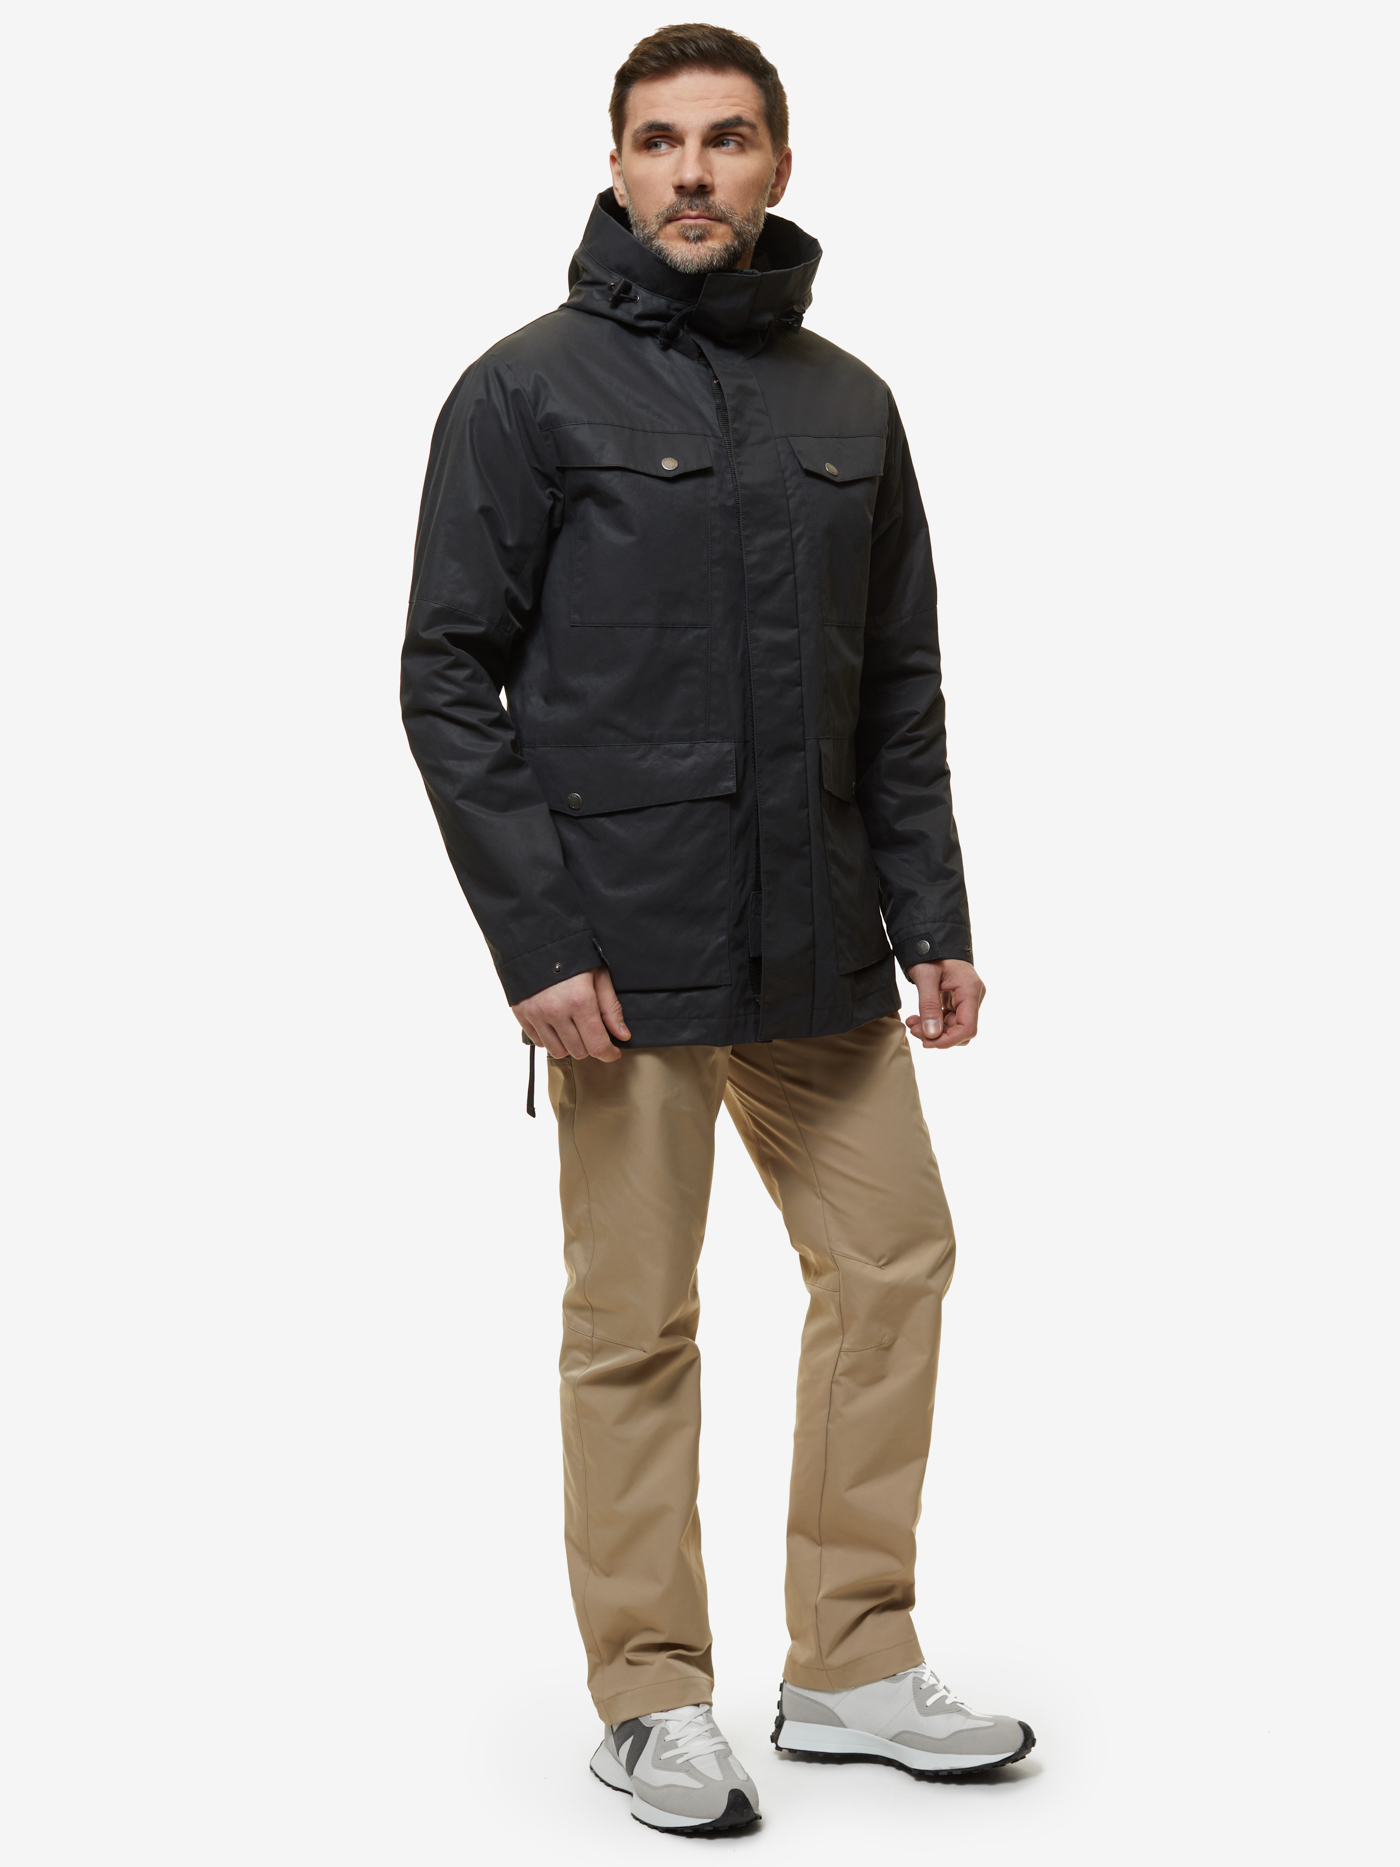 Куртка BASK, размер 50, цвет антрацит 22014-9674-050 Quebec v2 - фото 7